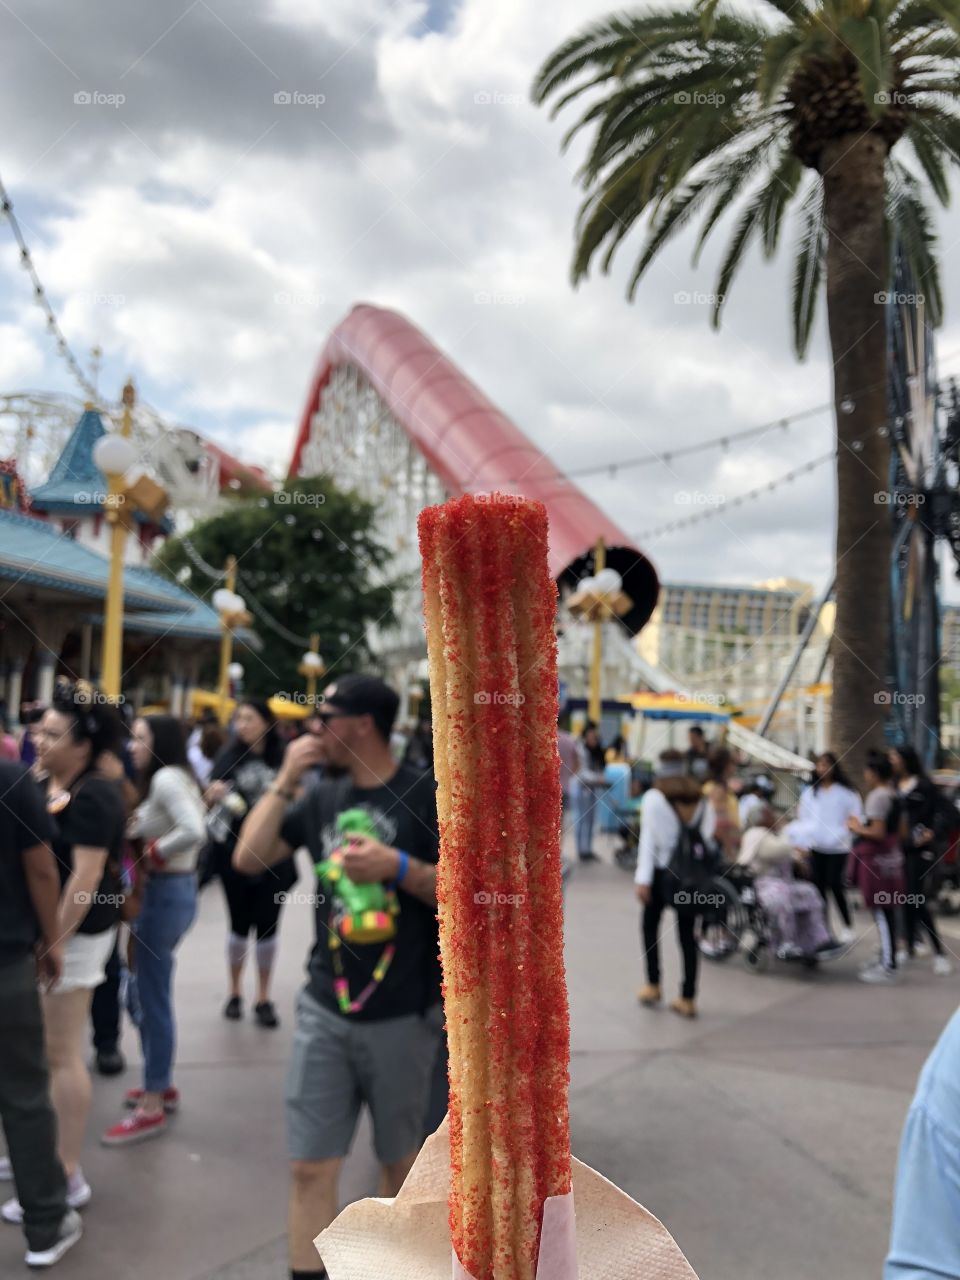 Señor Buzz Caliente Churro at Pixar Pier (California Adventure, Disneyland) in front of the Incredicoaster